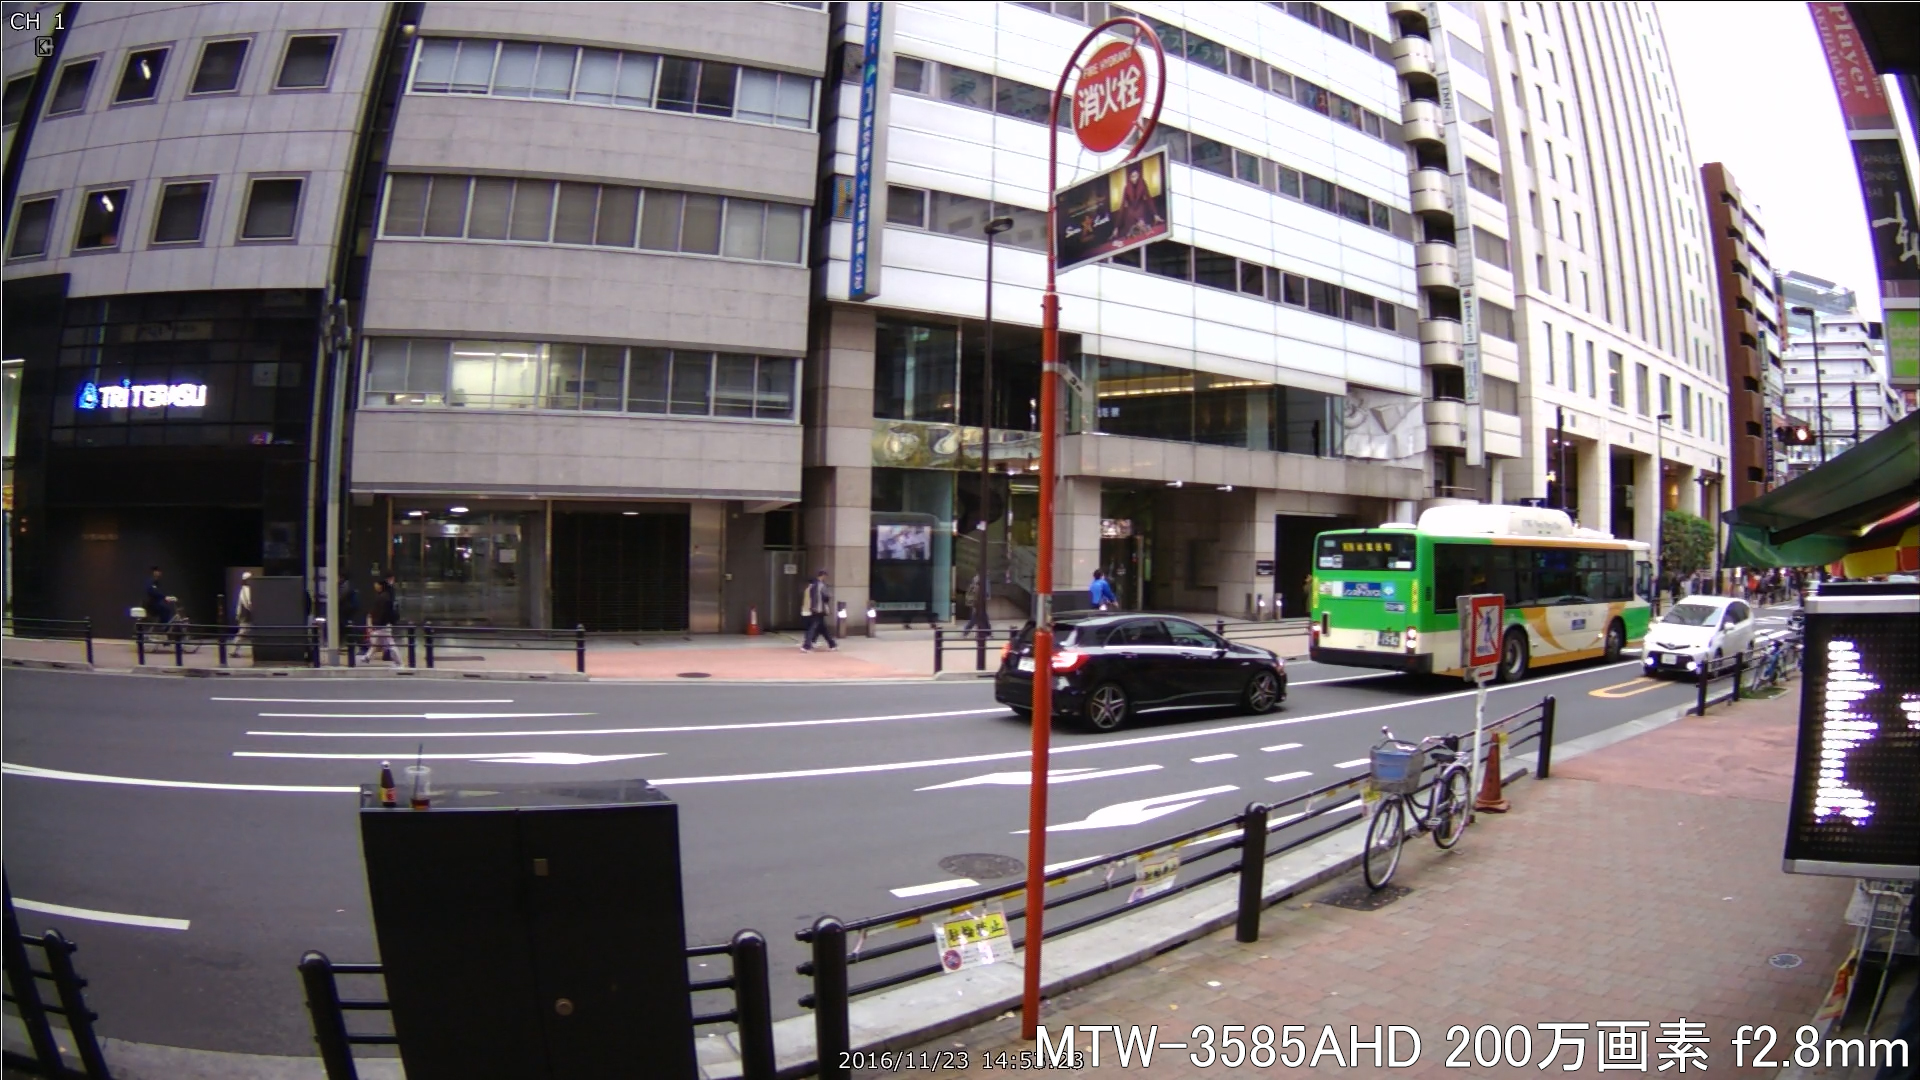 MTW-3585AHD 事務所外を撮影(屋外)